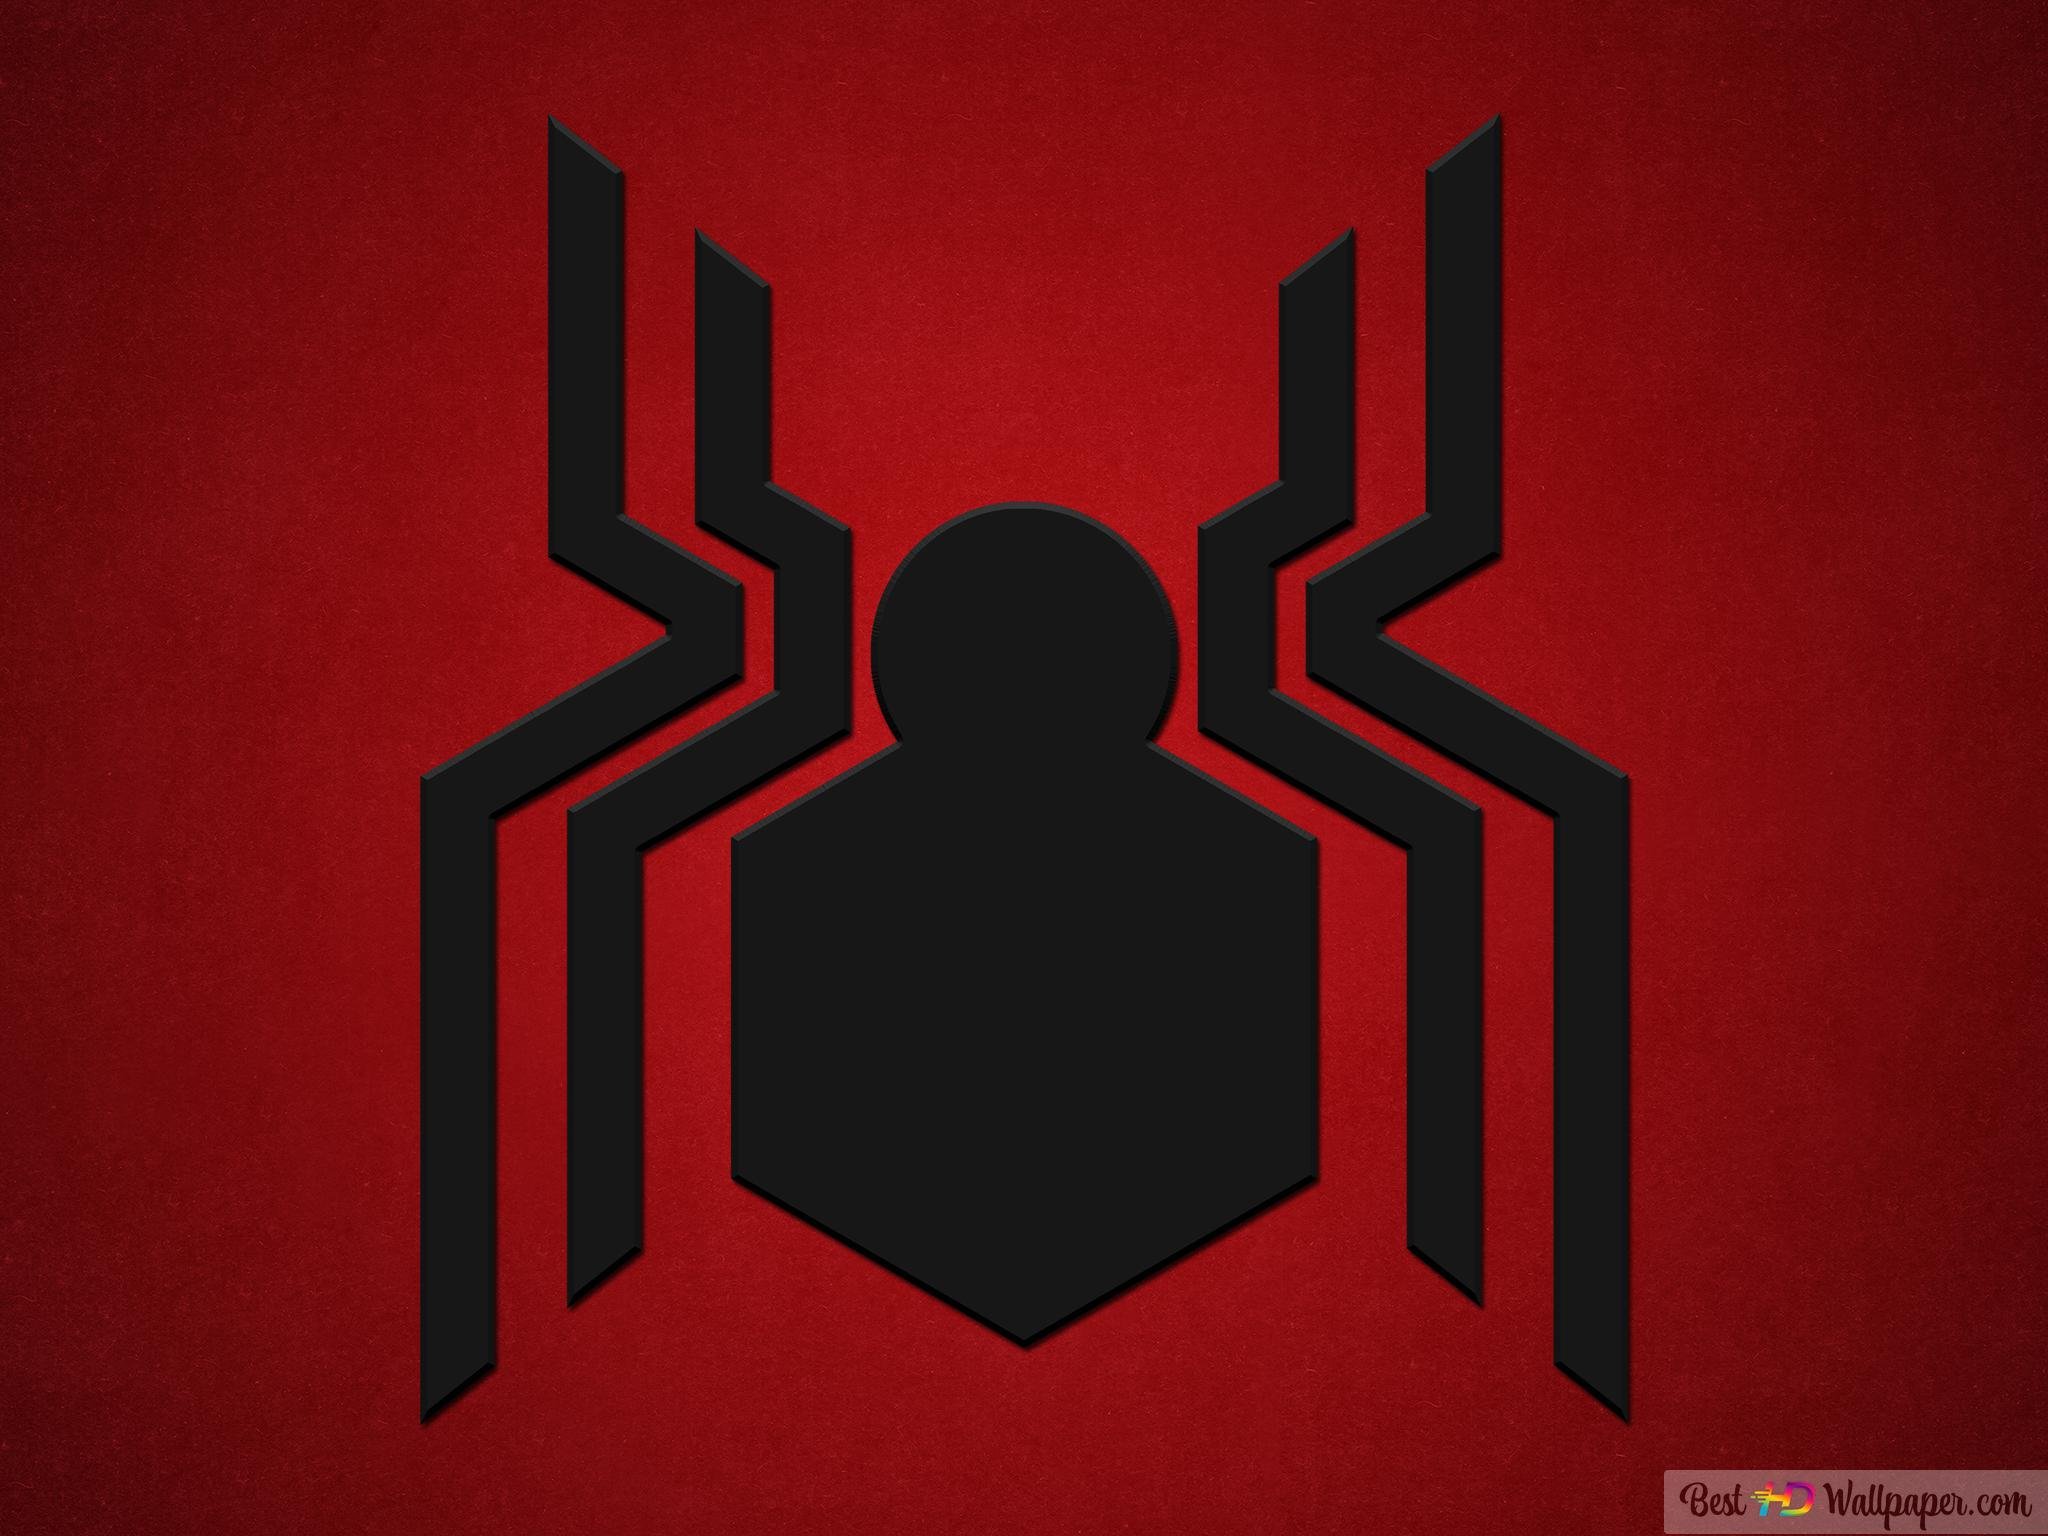 Отличительный знак человека. Логотип человека паука. Логотип черного человека паука. Человек паук значок круглый. Логотип Спайдермен 2.